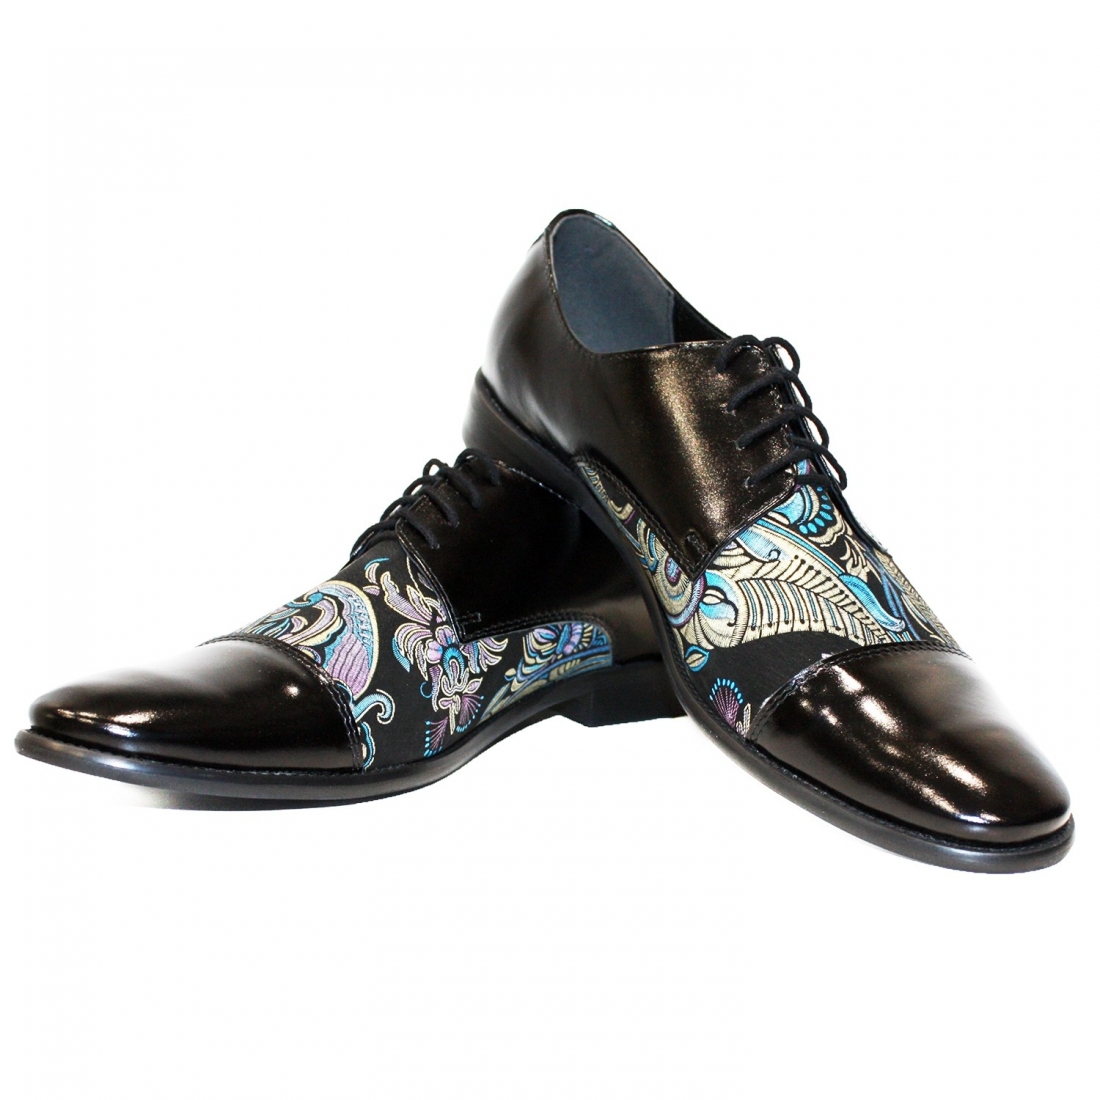 Modello Ulerro - Classic Shoes - Handmade Colorful Italian Leather Shoes